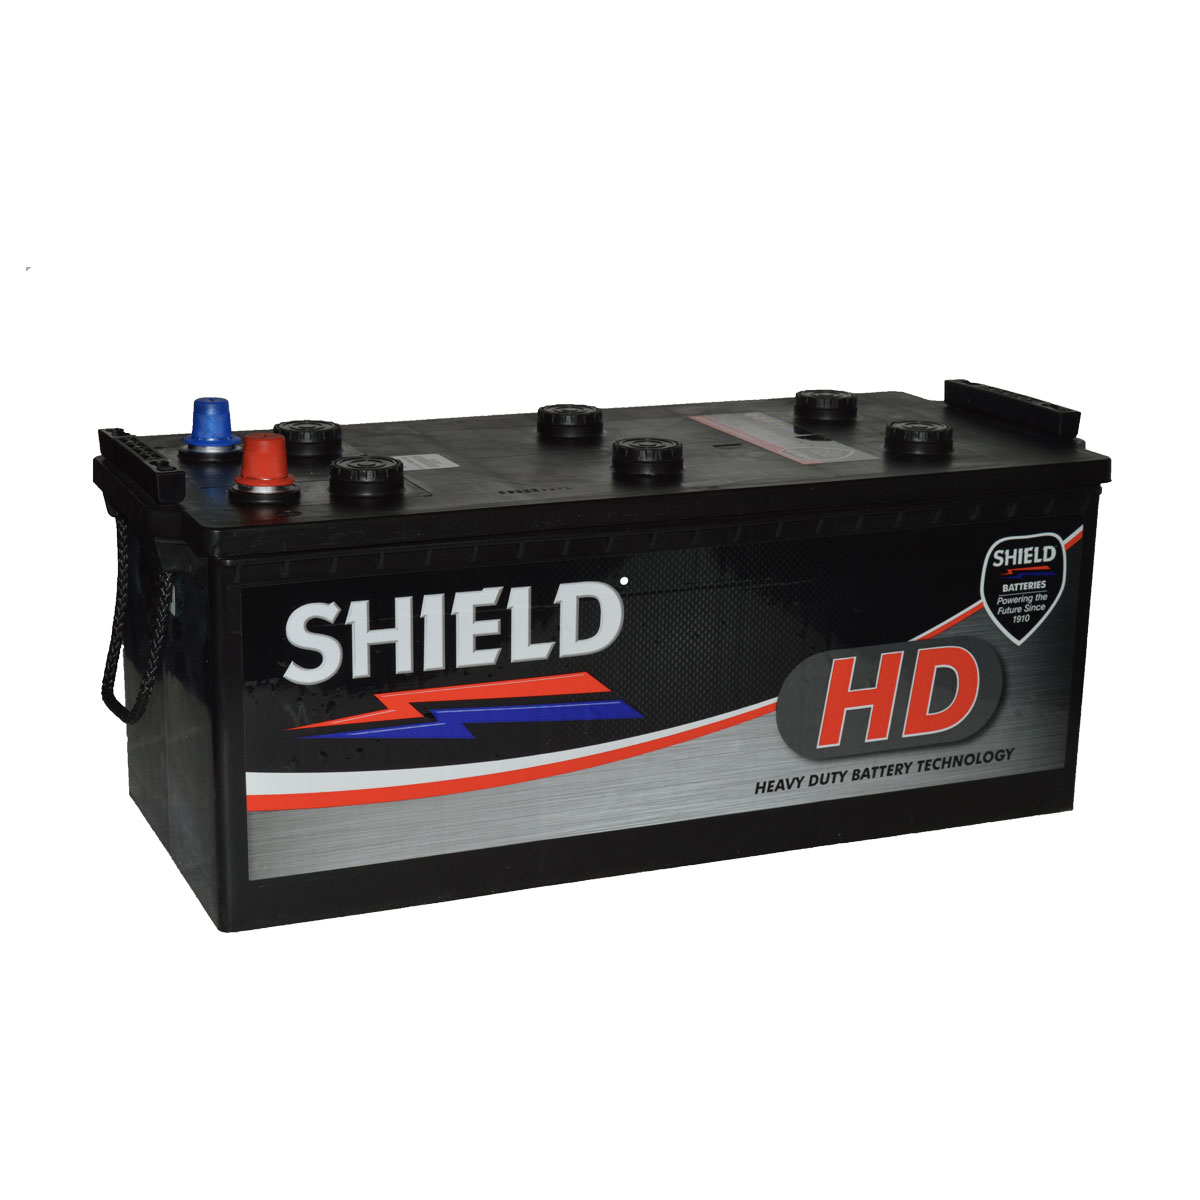 Shield-HD-CV-Range.jpg